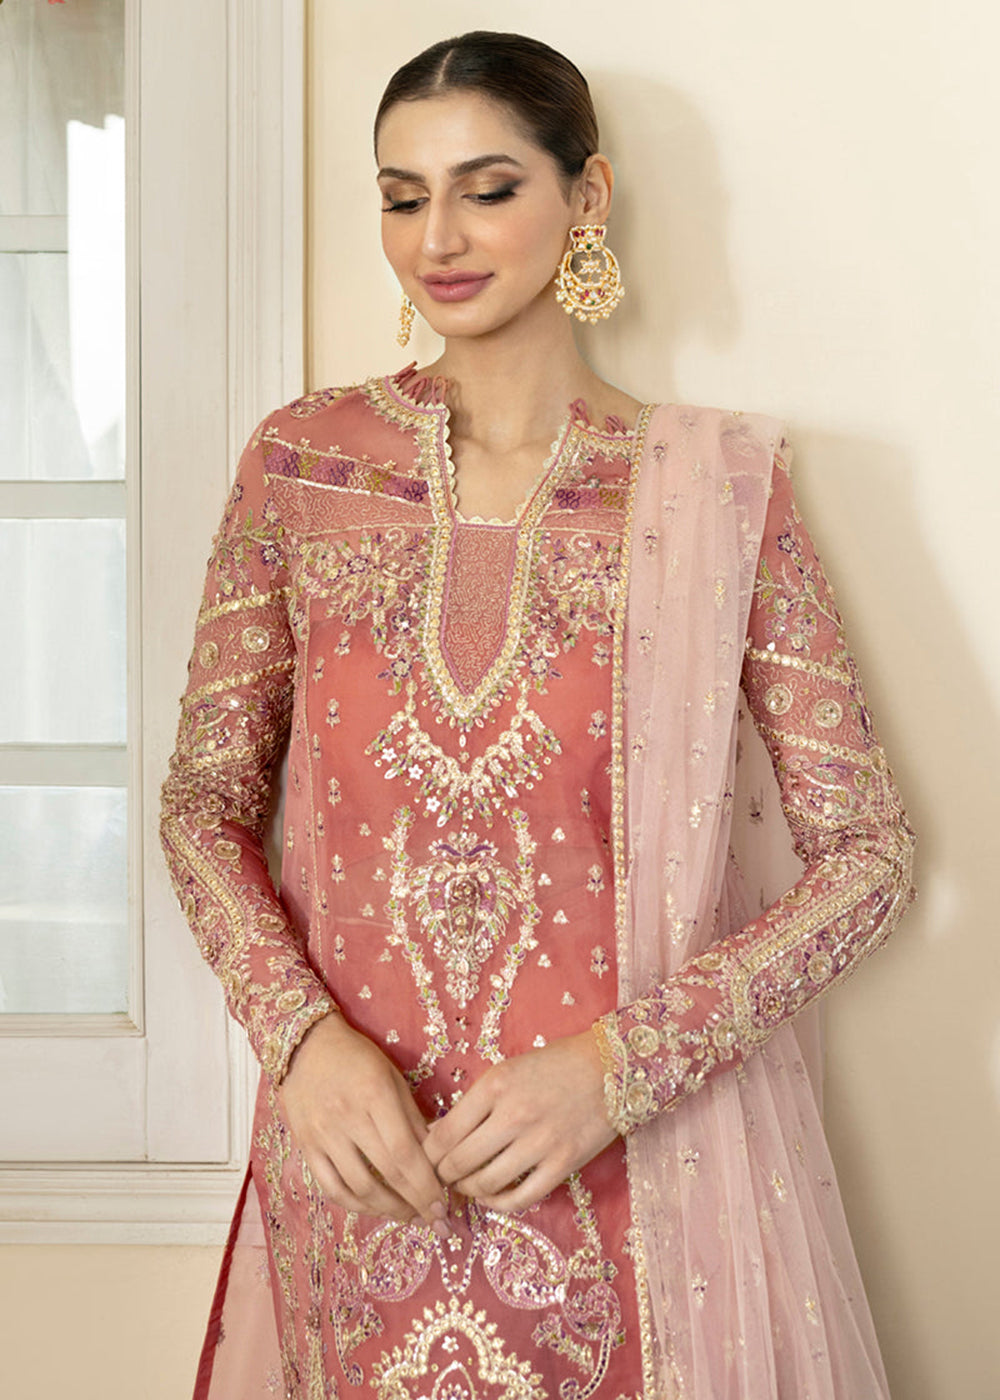 Buy Now Dilnaaz Wedding Formals 2023 by Qalamkar | DN-05 - SAMARA Online in USA, UK, Canada & Worldwide at Empress Clothing. 